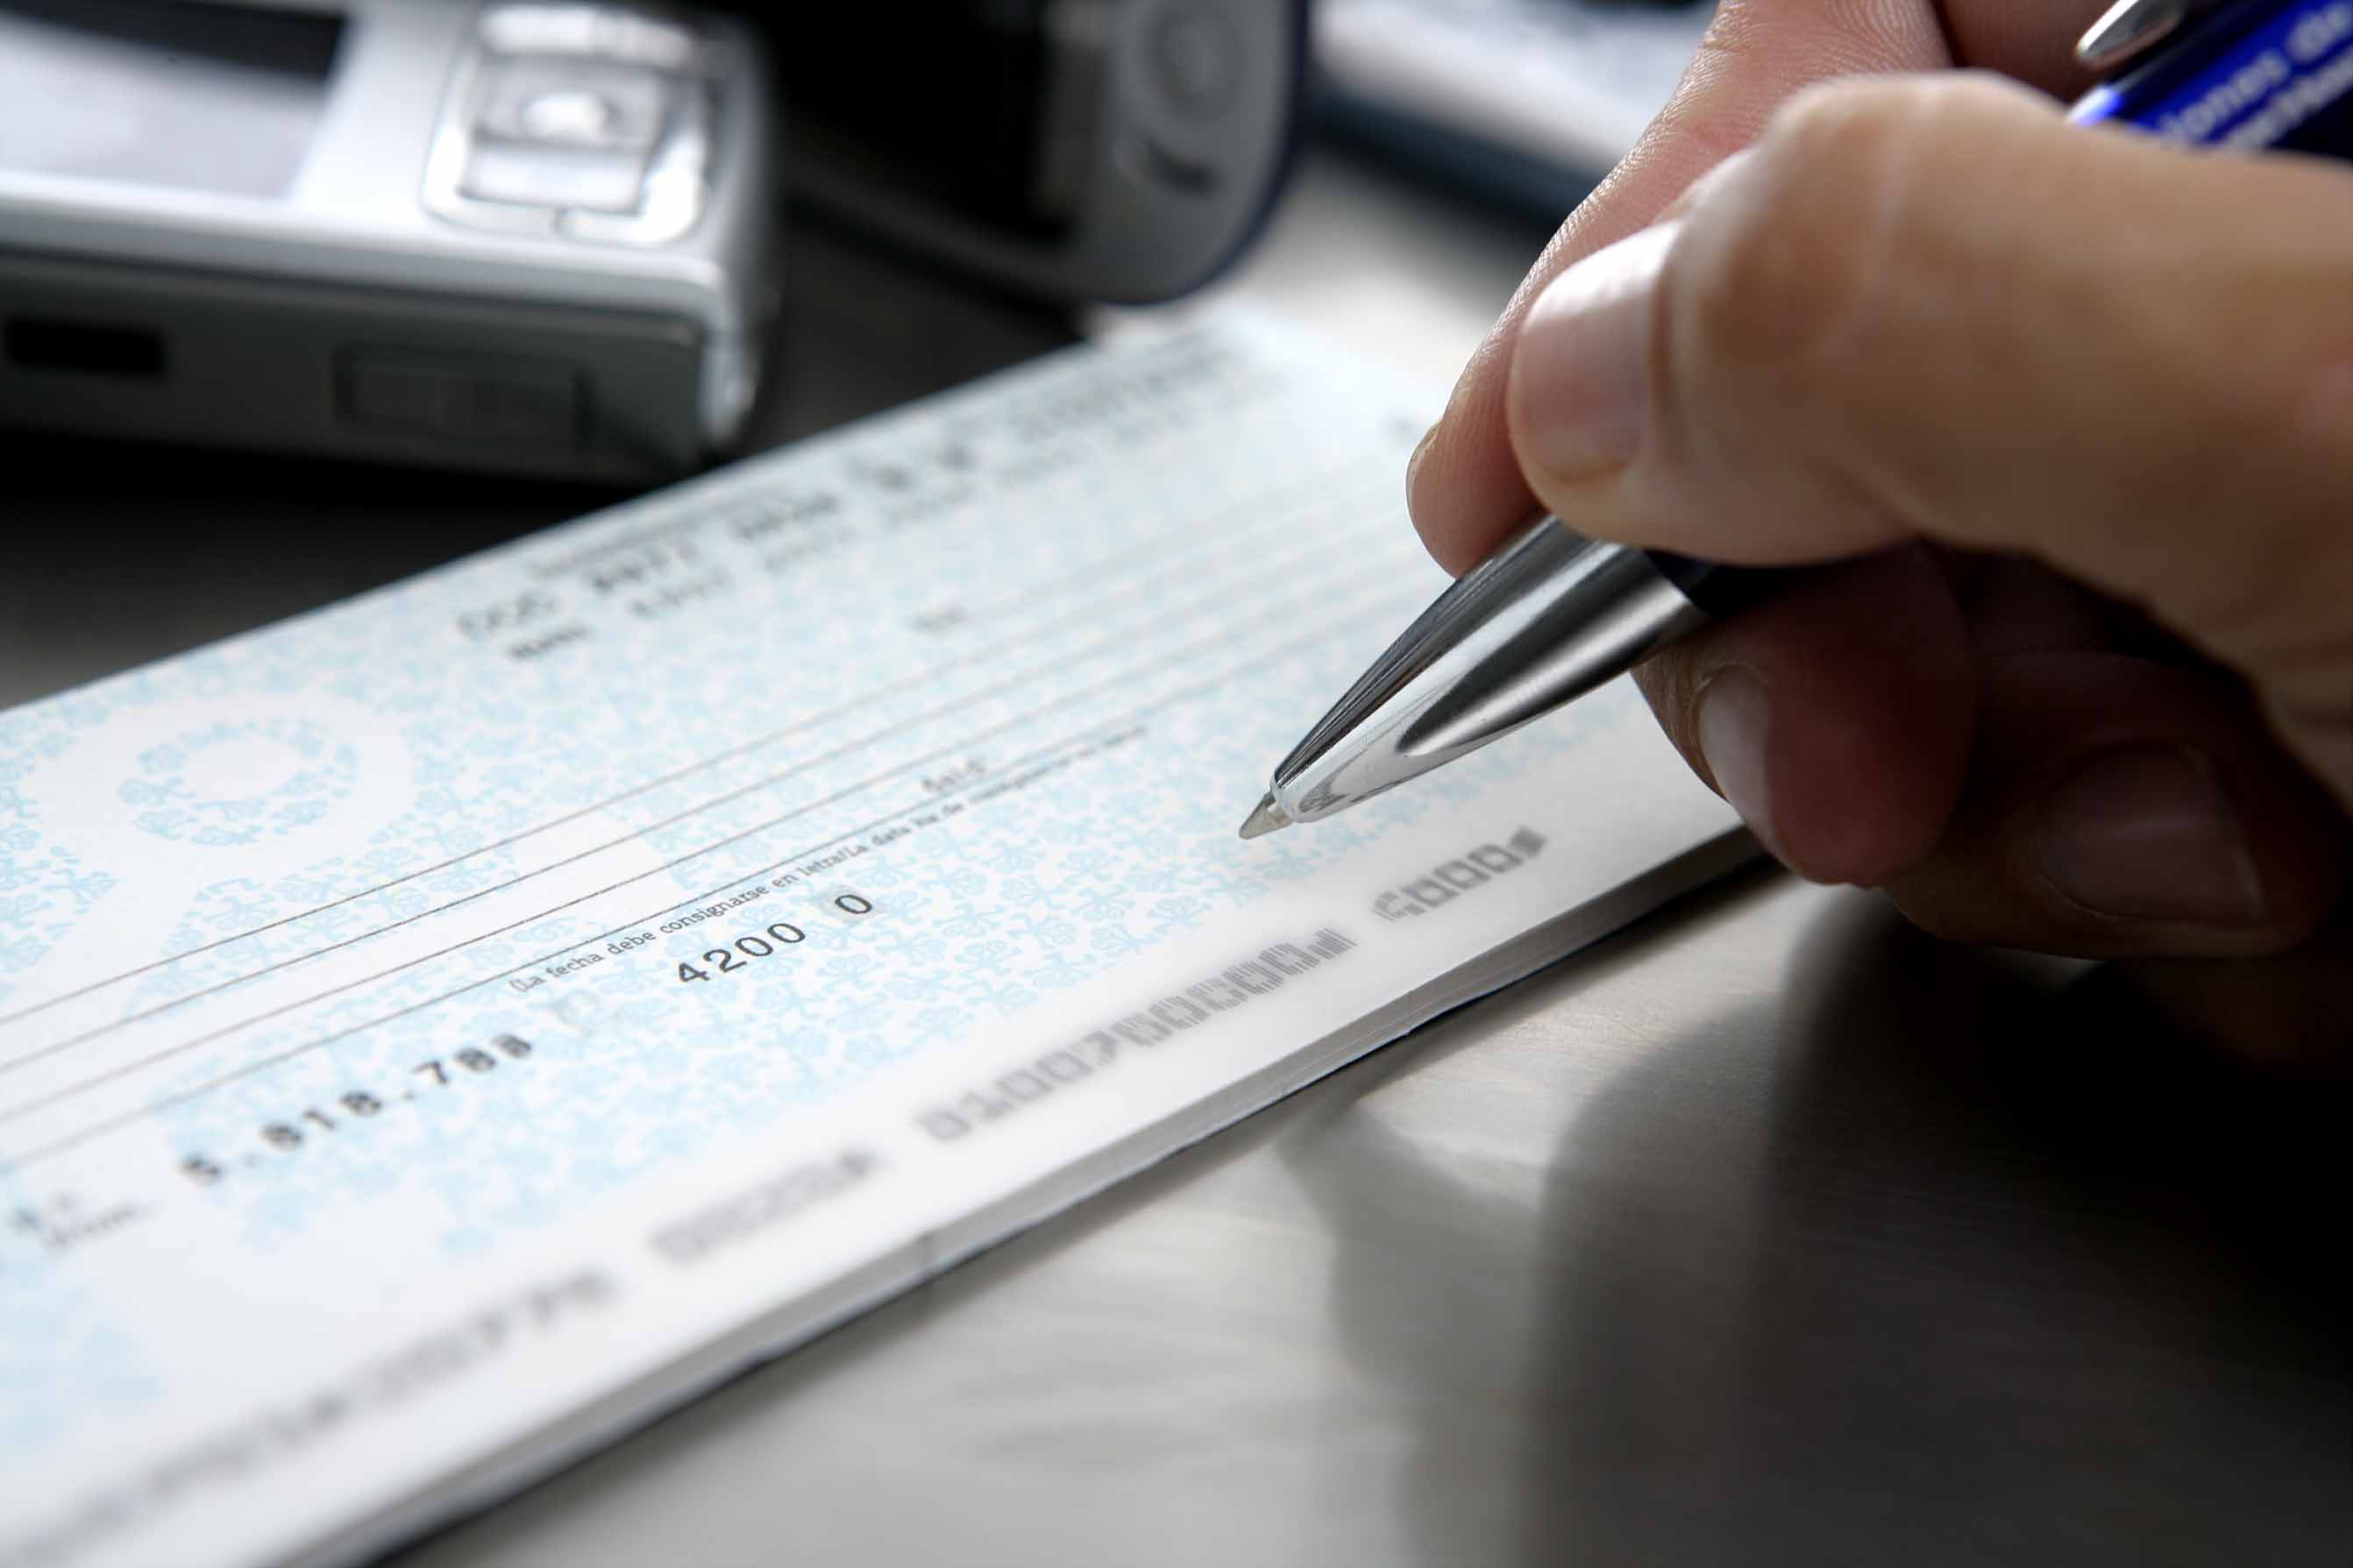 How to Write and Cash Checks Payable to Cash